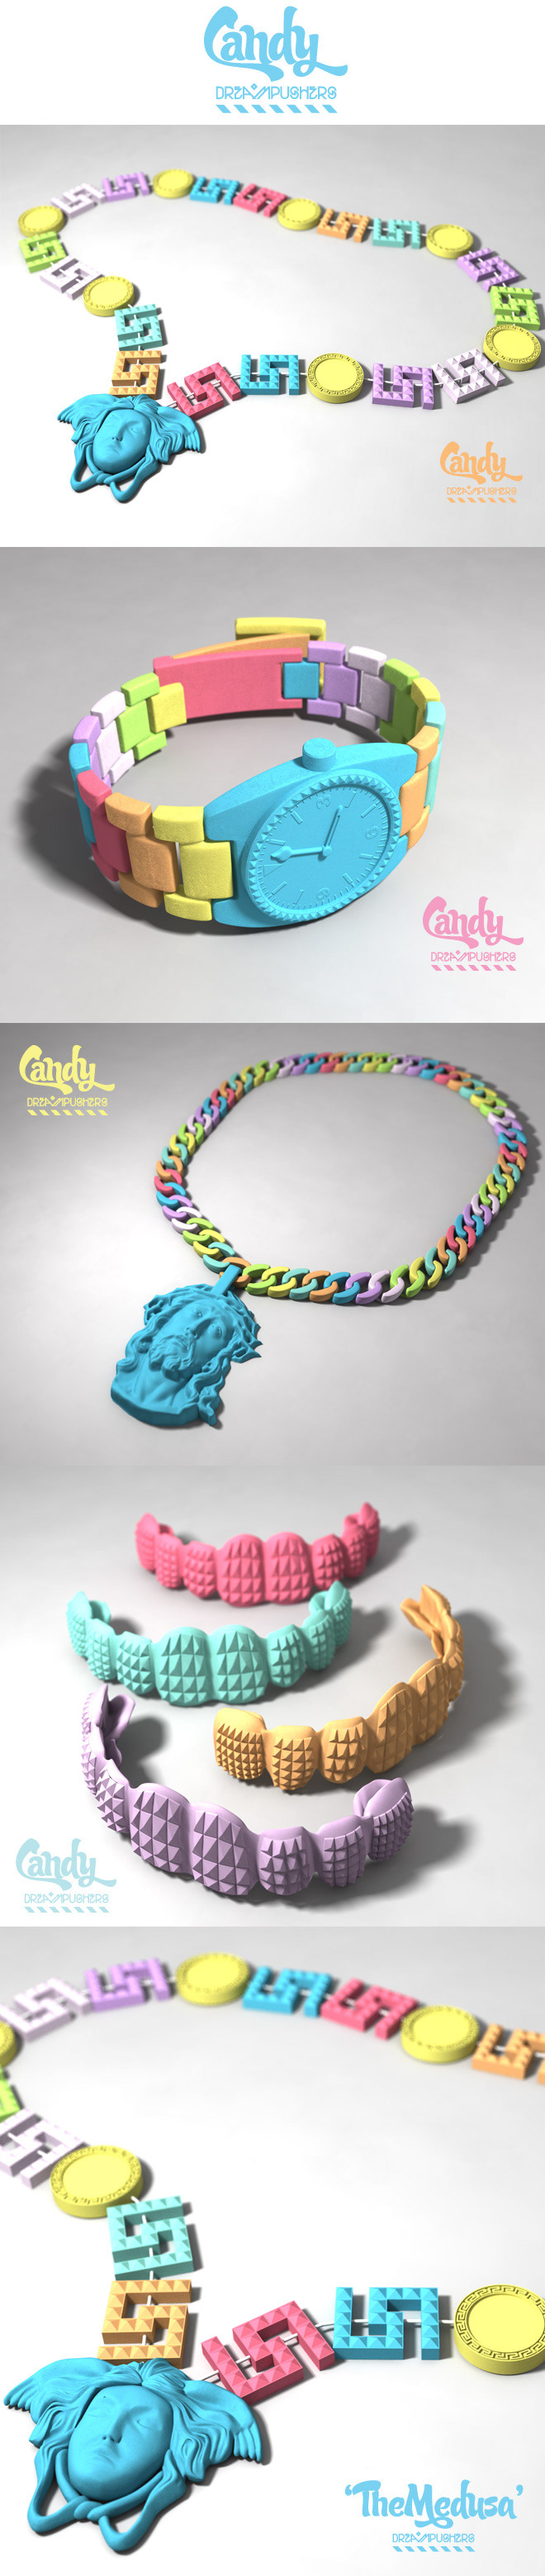 Candy 3D  dreampushers concept conceptual designer Fun